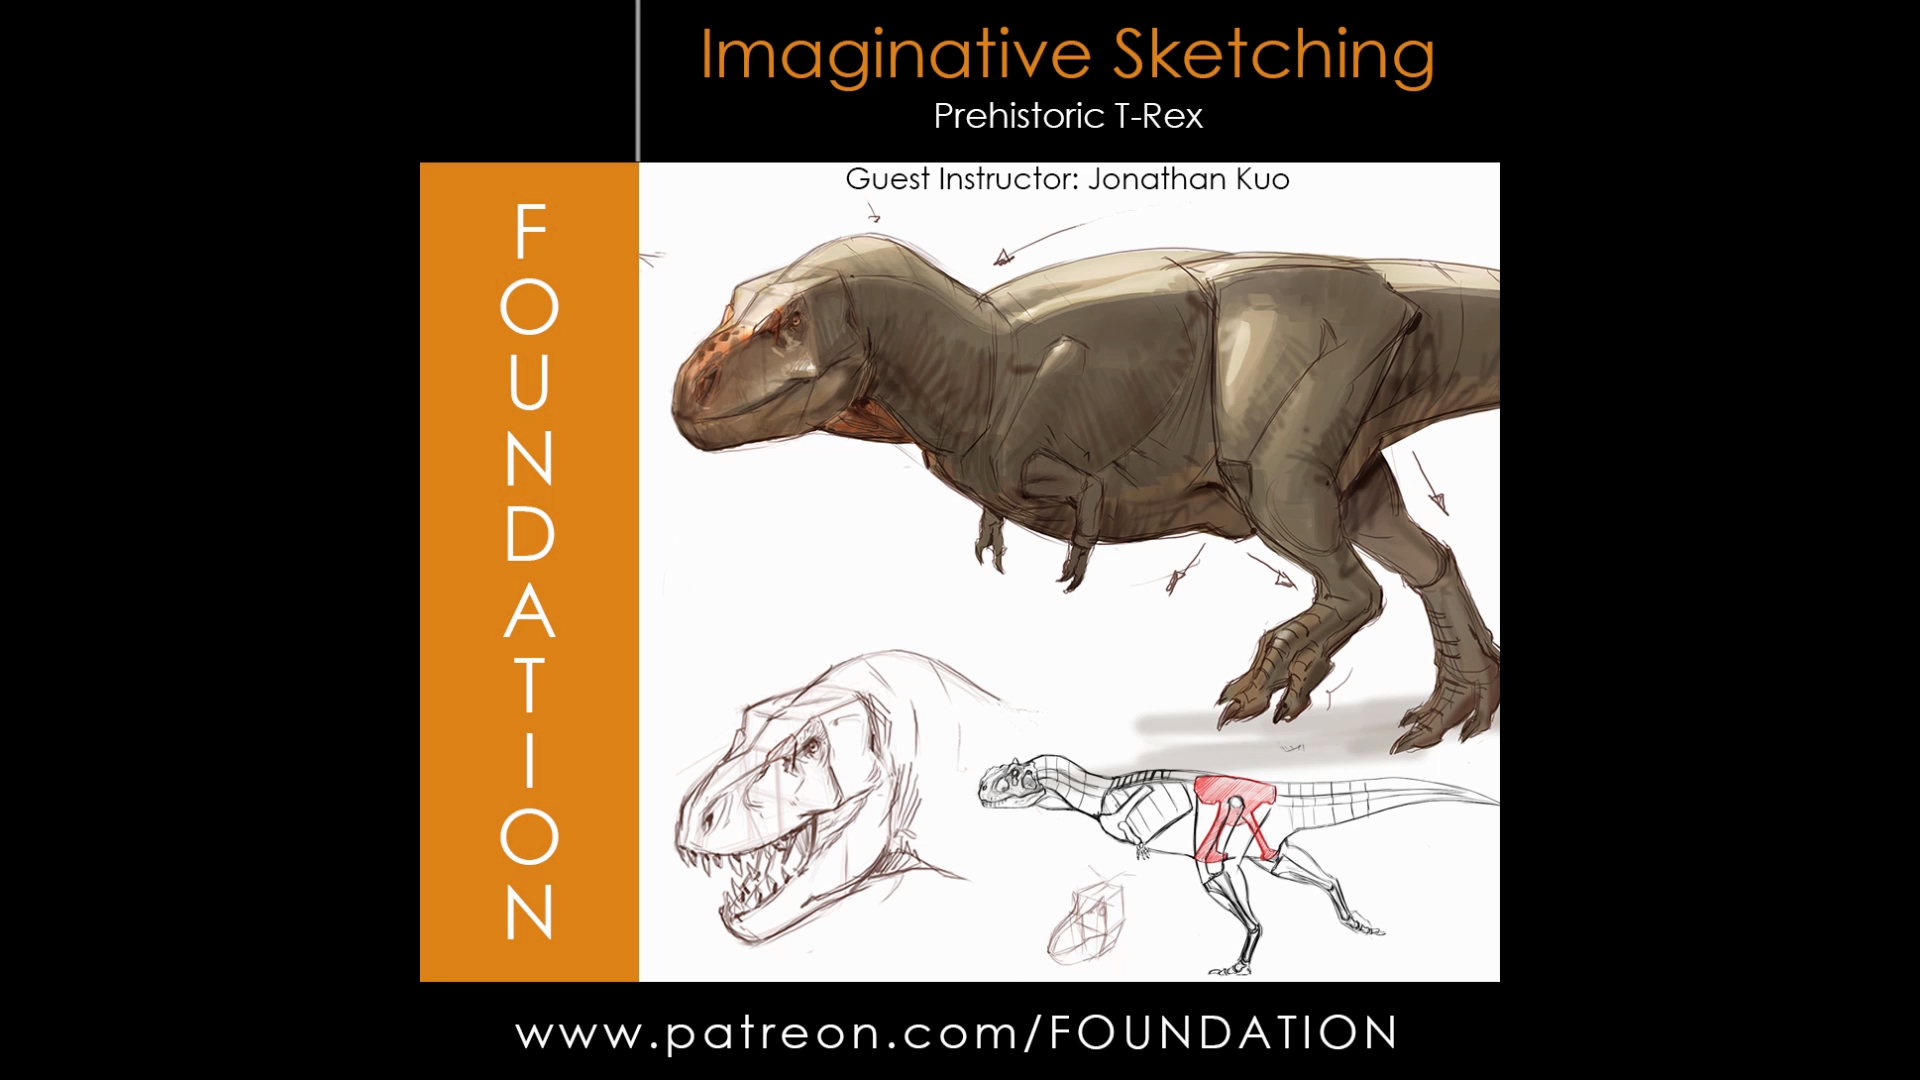 Imaginative Sketching – Prehistoric T-Rex with Jonathan Kuo